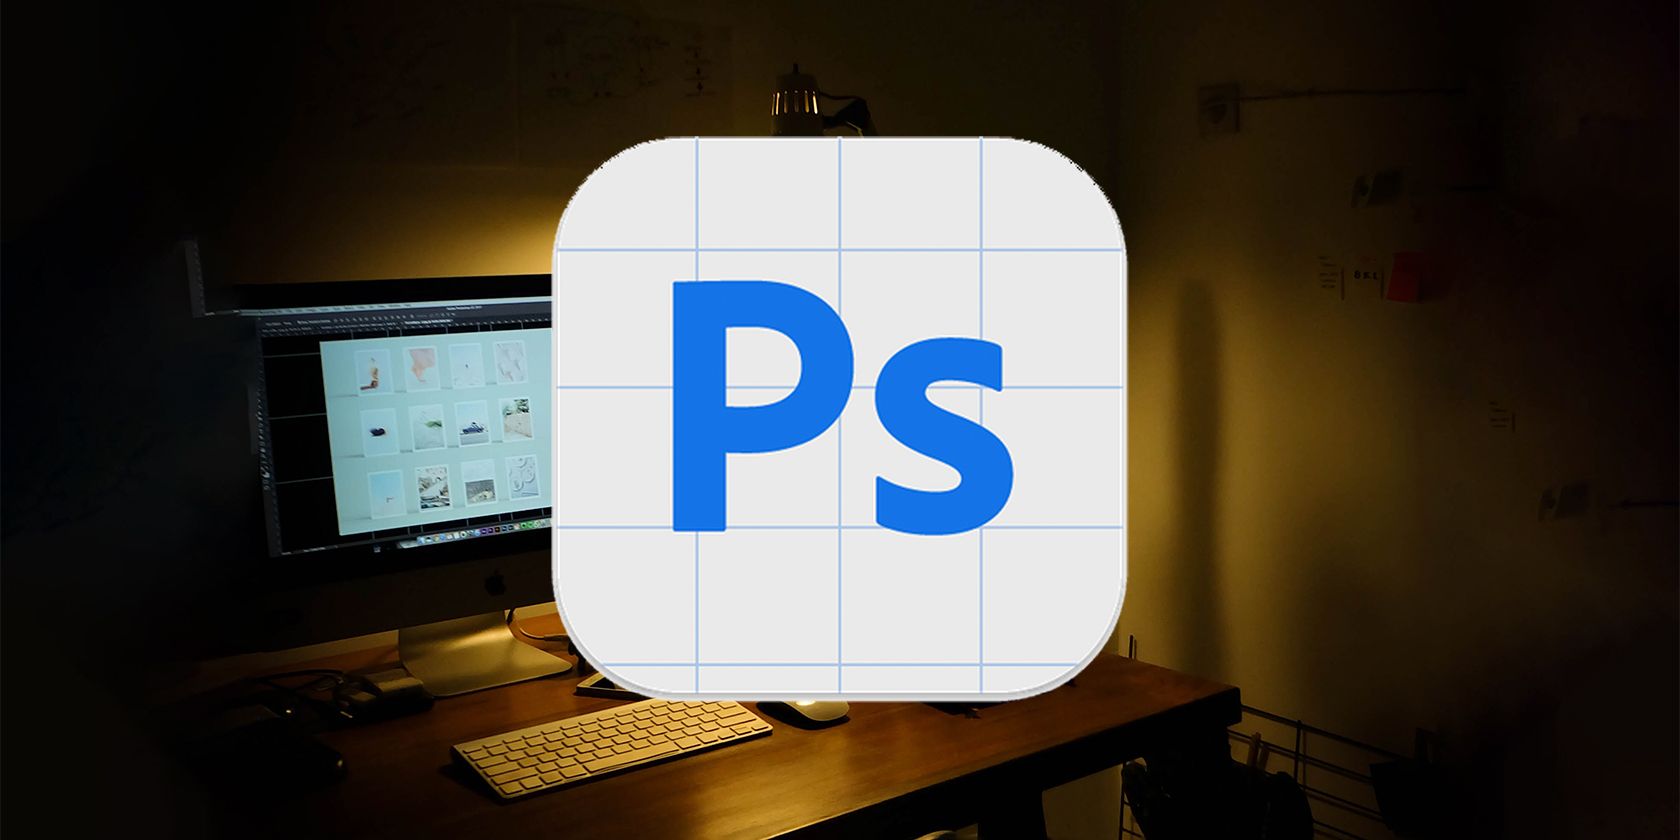 Photoshop Beta logo over image of computer.